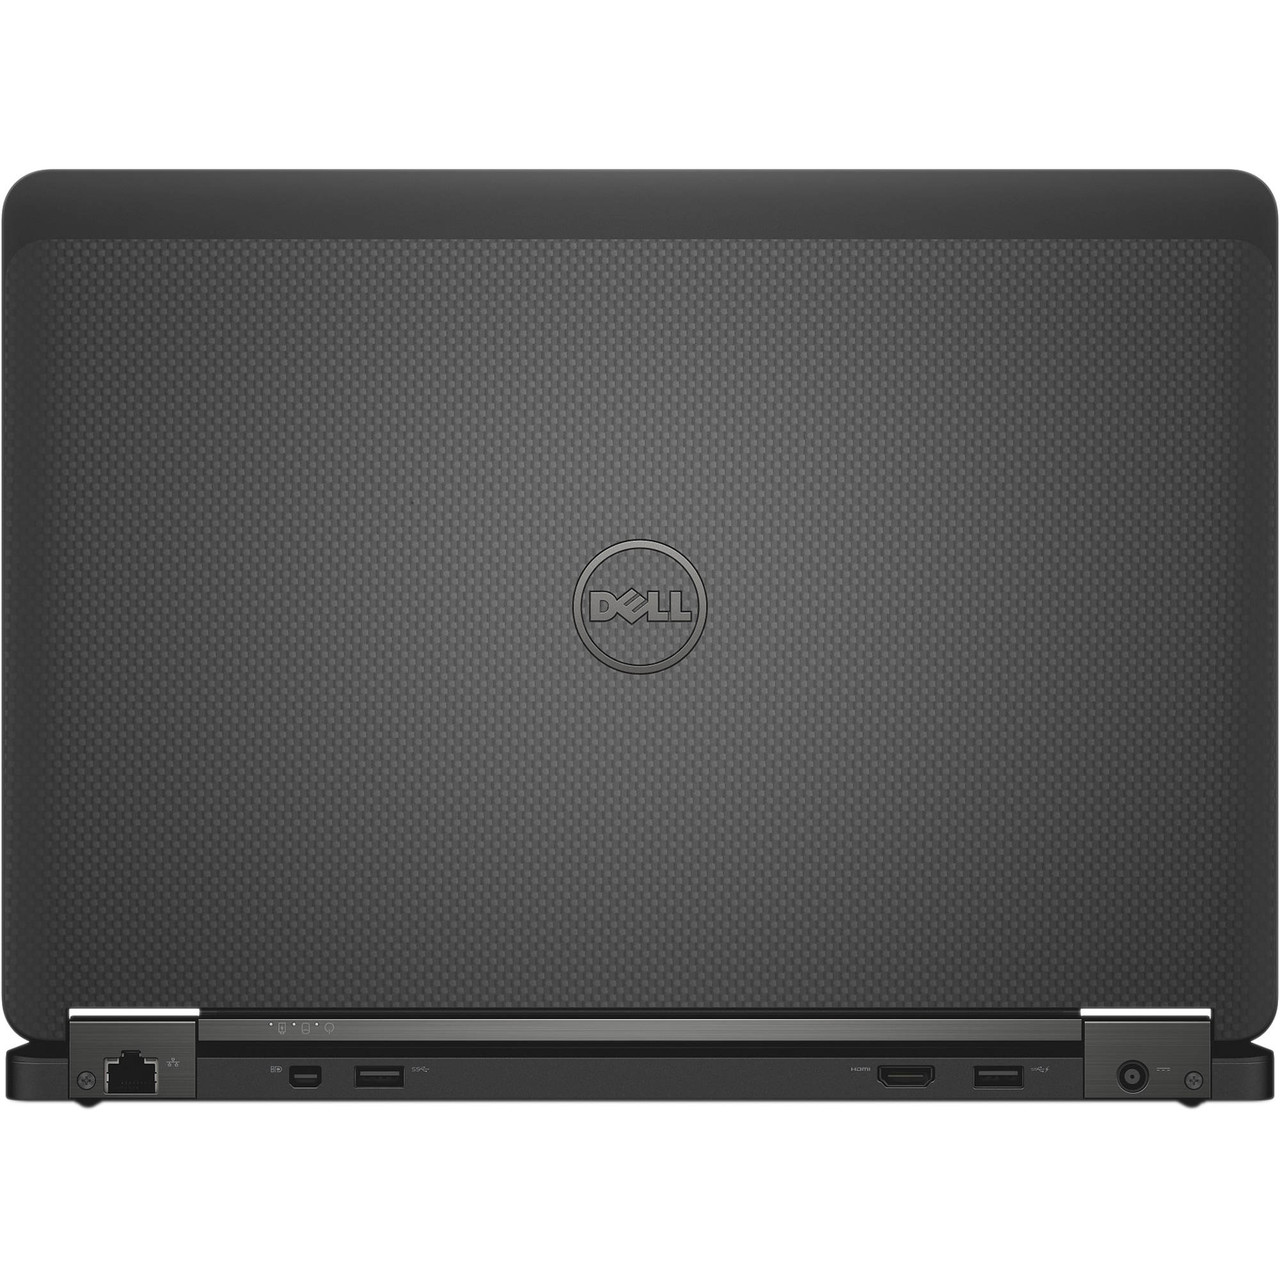 Dell Latitude E7450 Laptop Intel Core i5 2.3GHz 8GB Ram 256GB SSD Windows 10 Pro | Refurbished